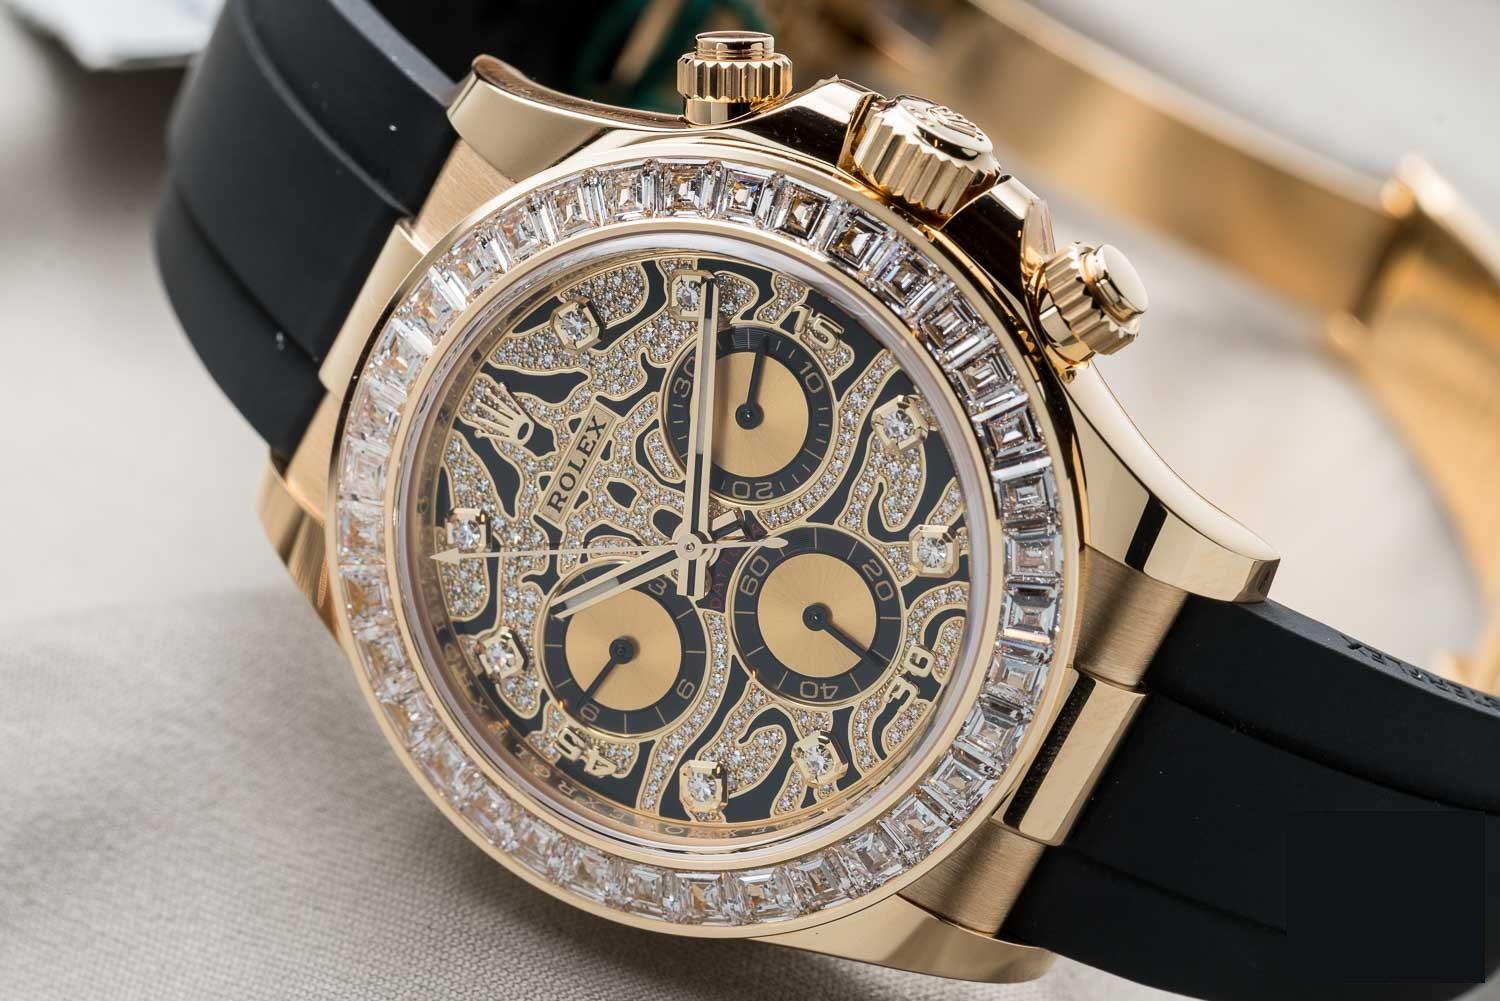 Đồng hồ Rolex nổi tiếng bắt mắt 